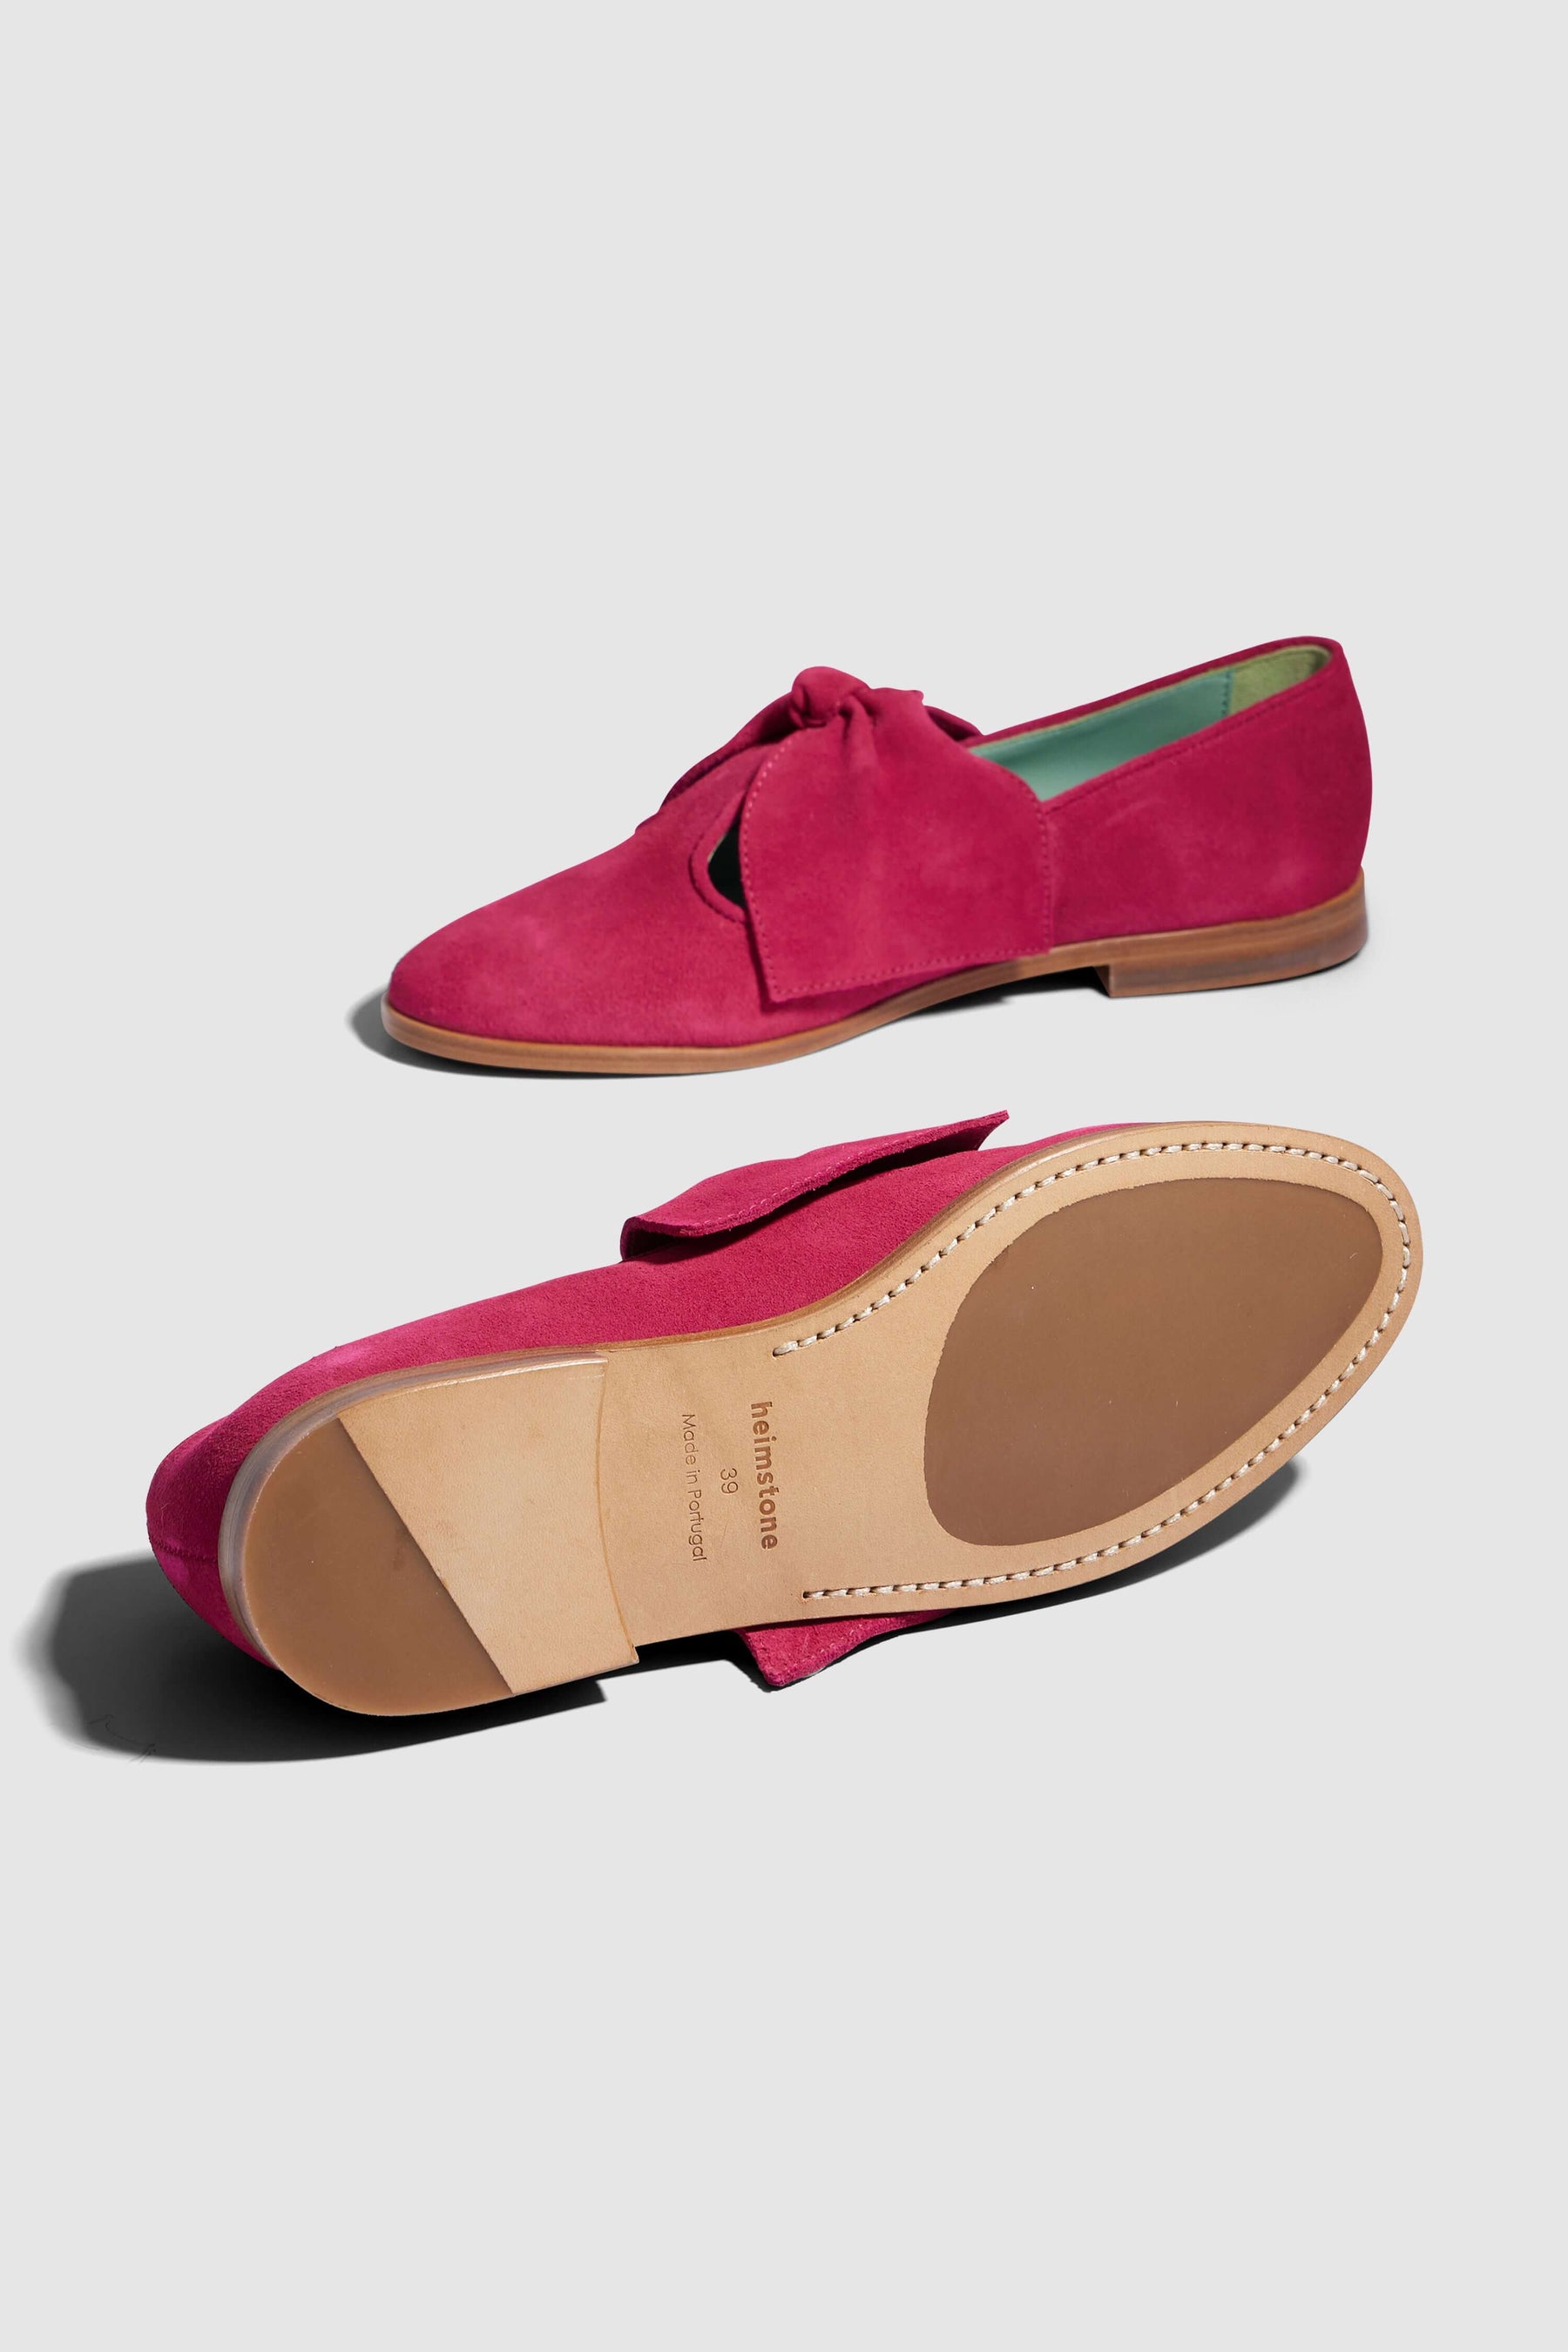 BB ballerina shoes in fuschia suede leather | Heimstone